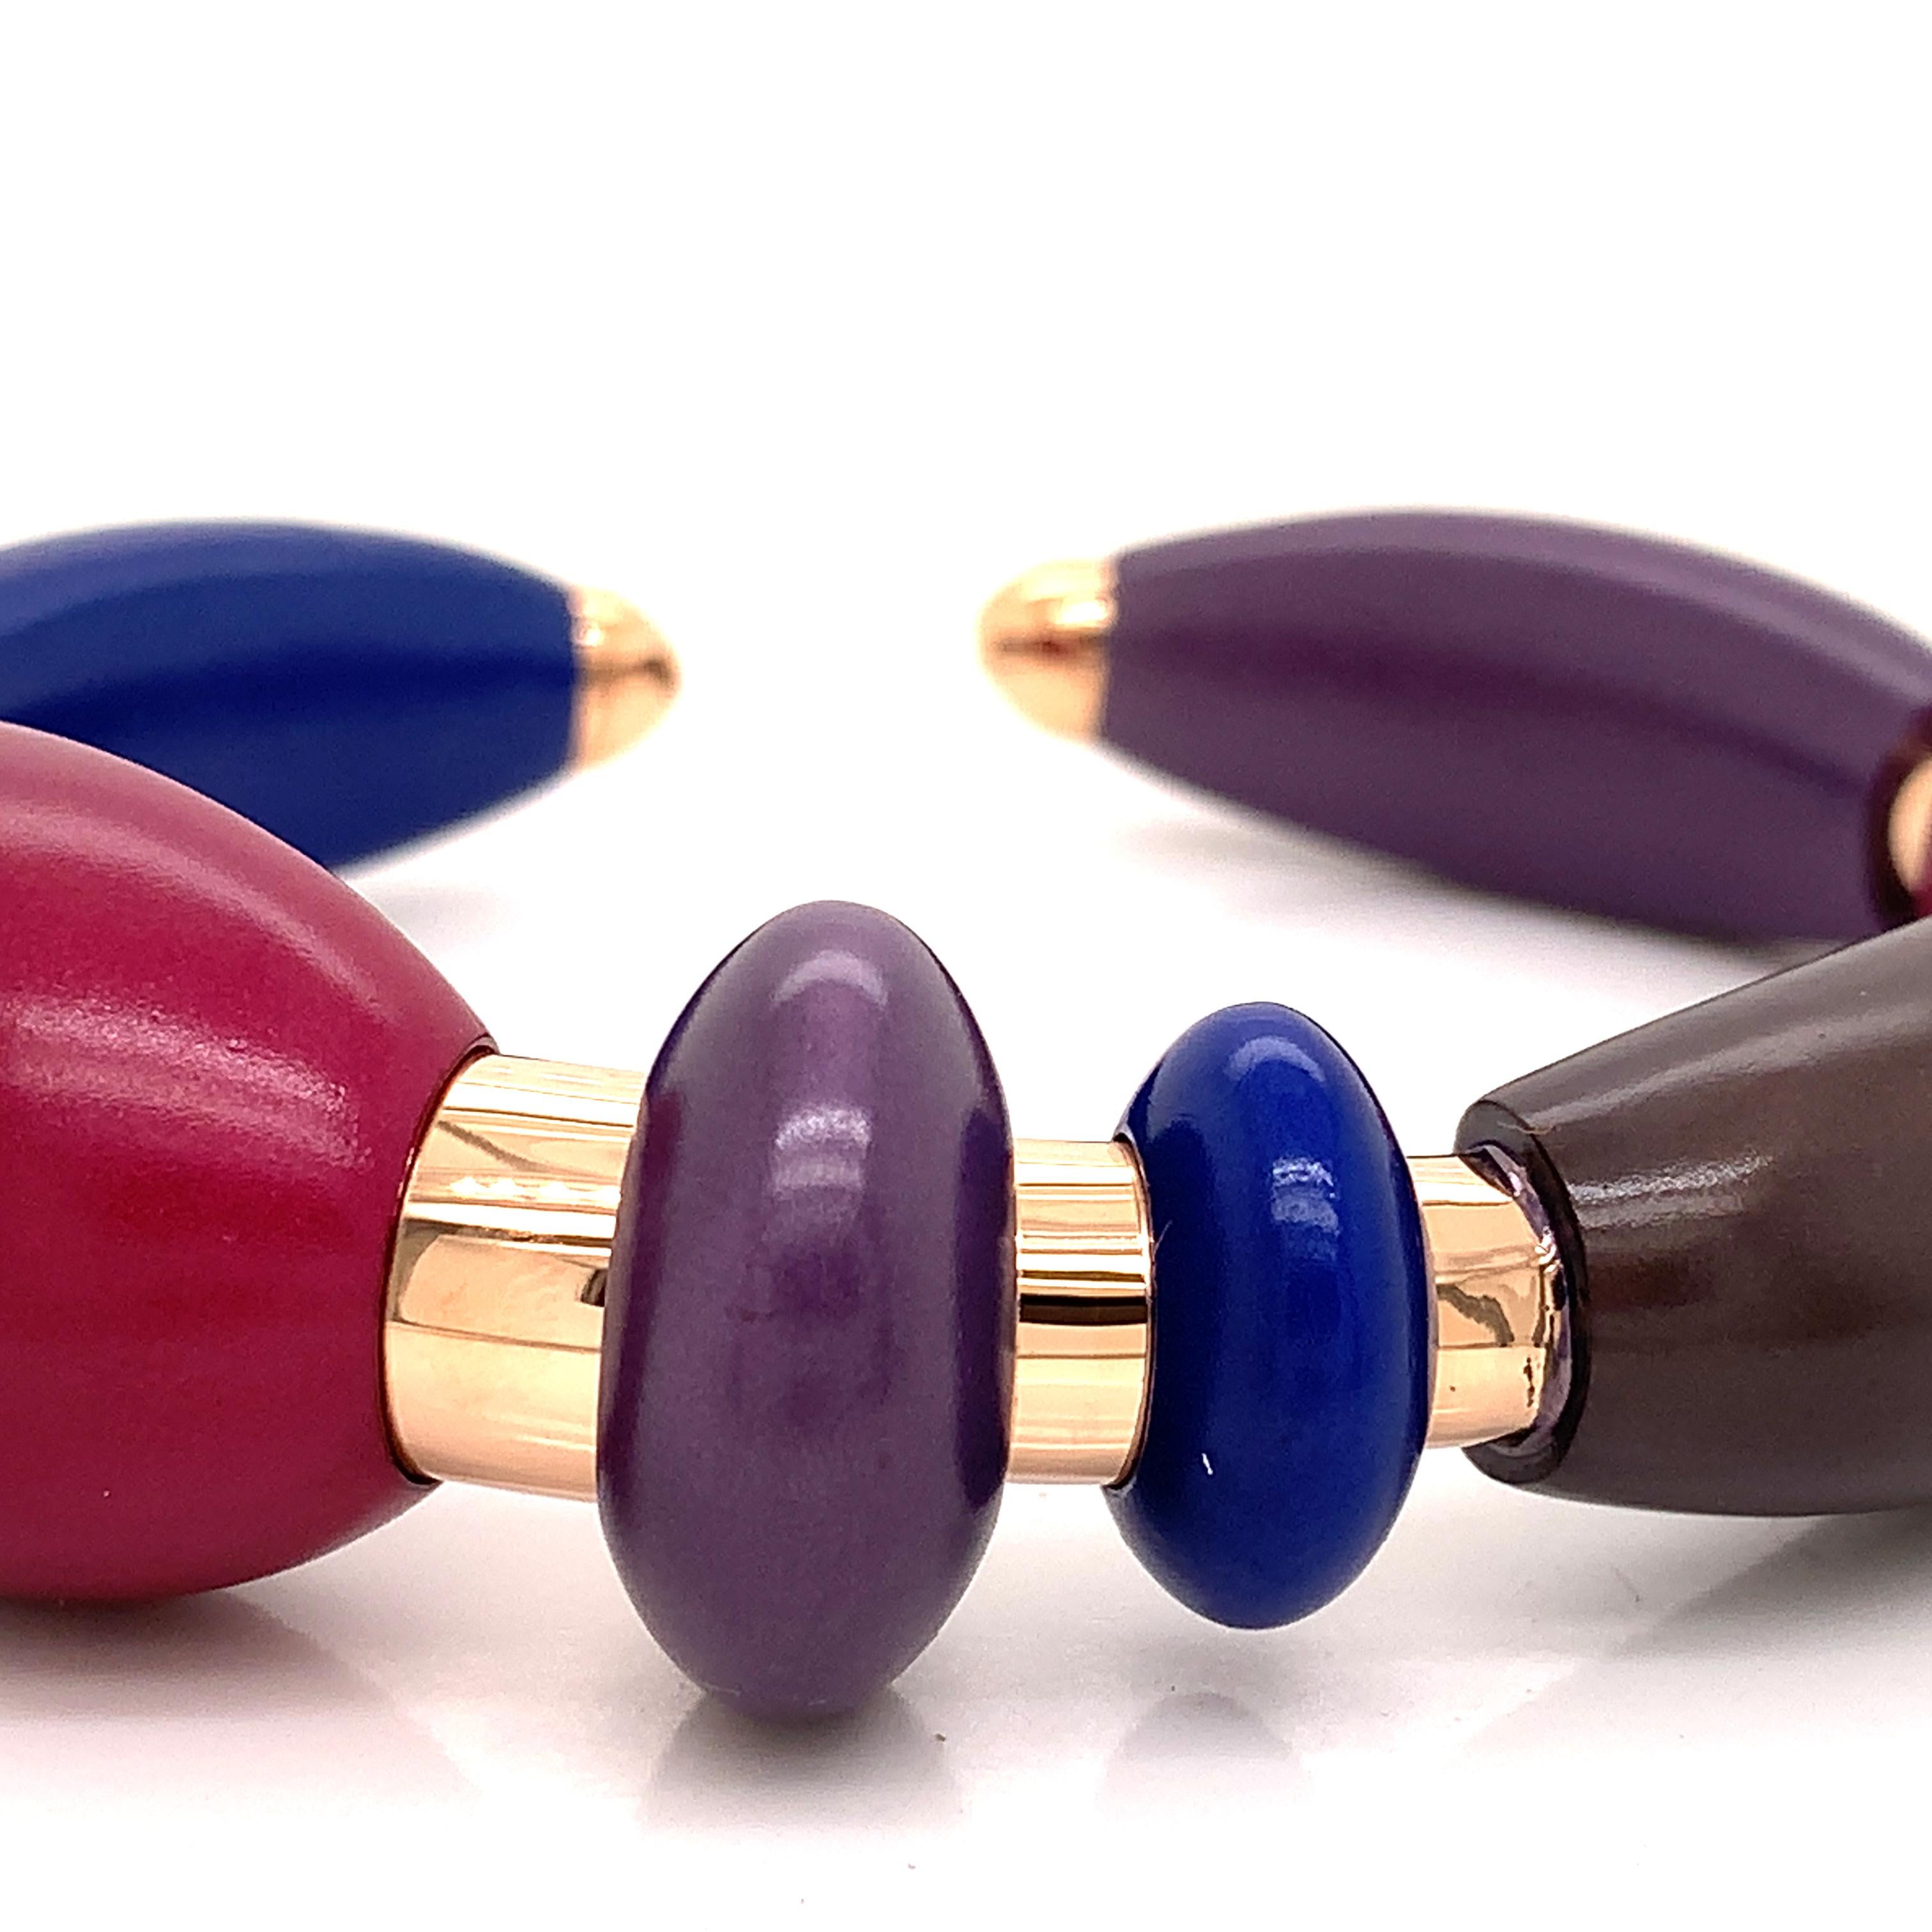 18 Karat Rose Gold and Multicolor ( purple, violet, blue, gunmetal colors) Bronze Modern  Bracelet 
New Dolce Vita Collection by Garavelli
Cuff bracelet - Size 7